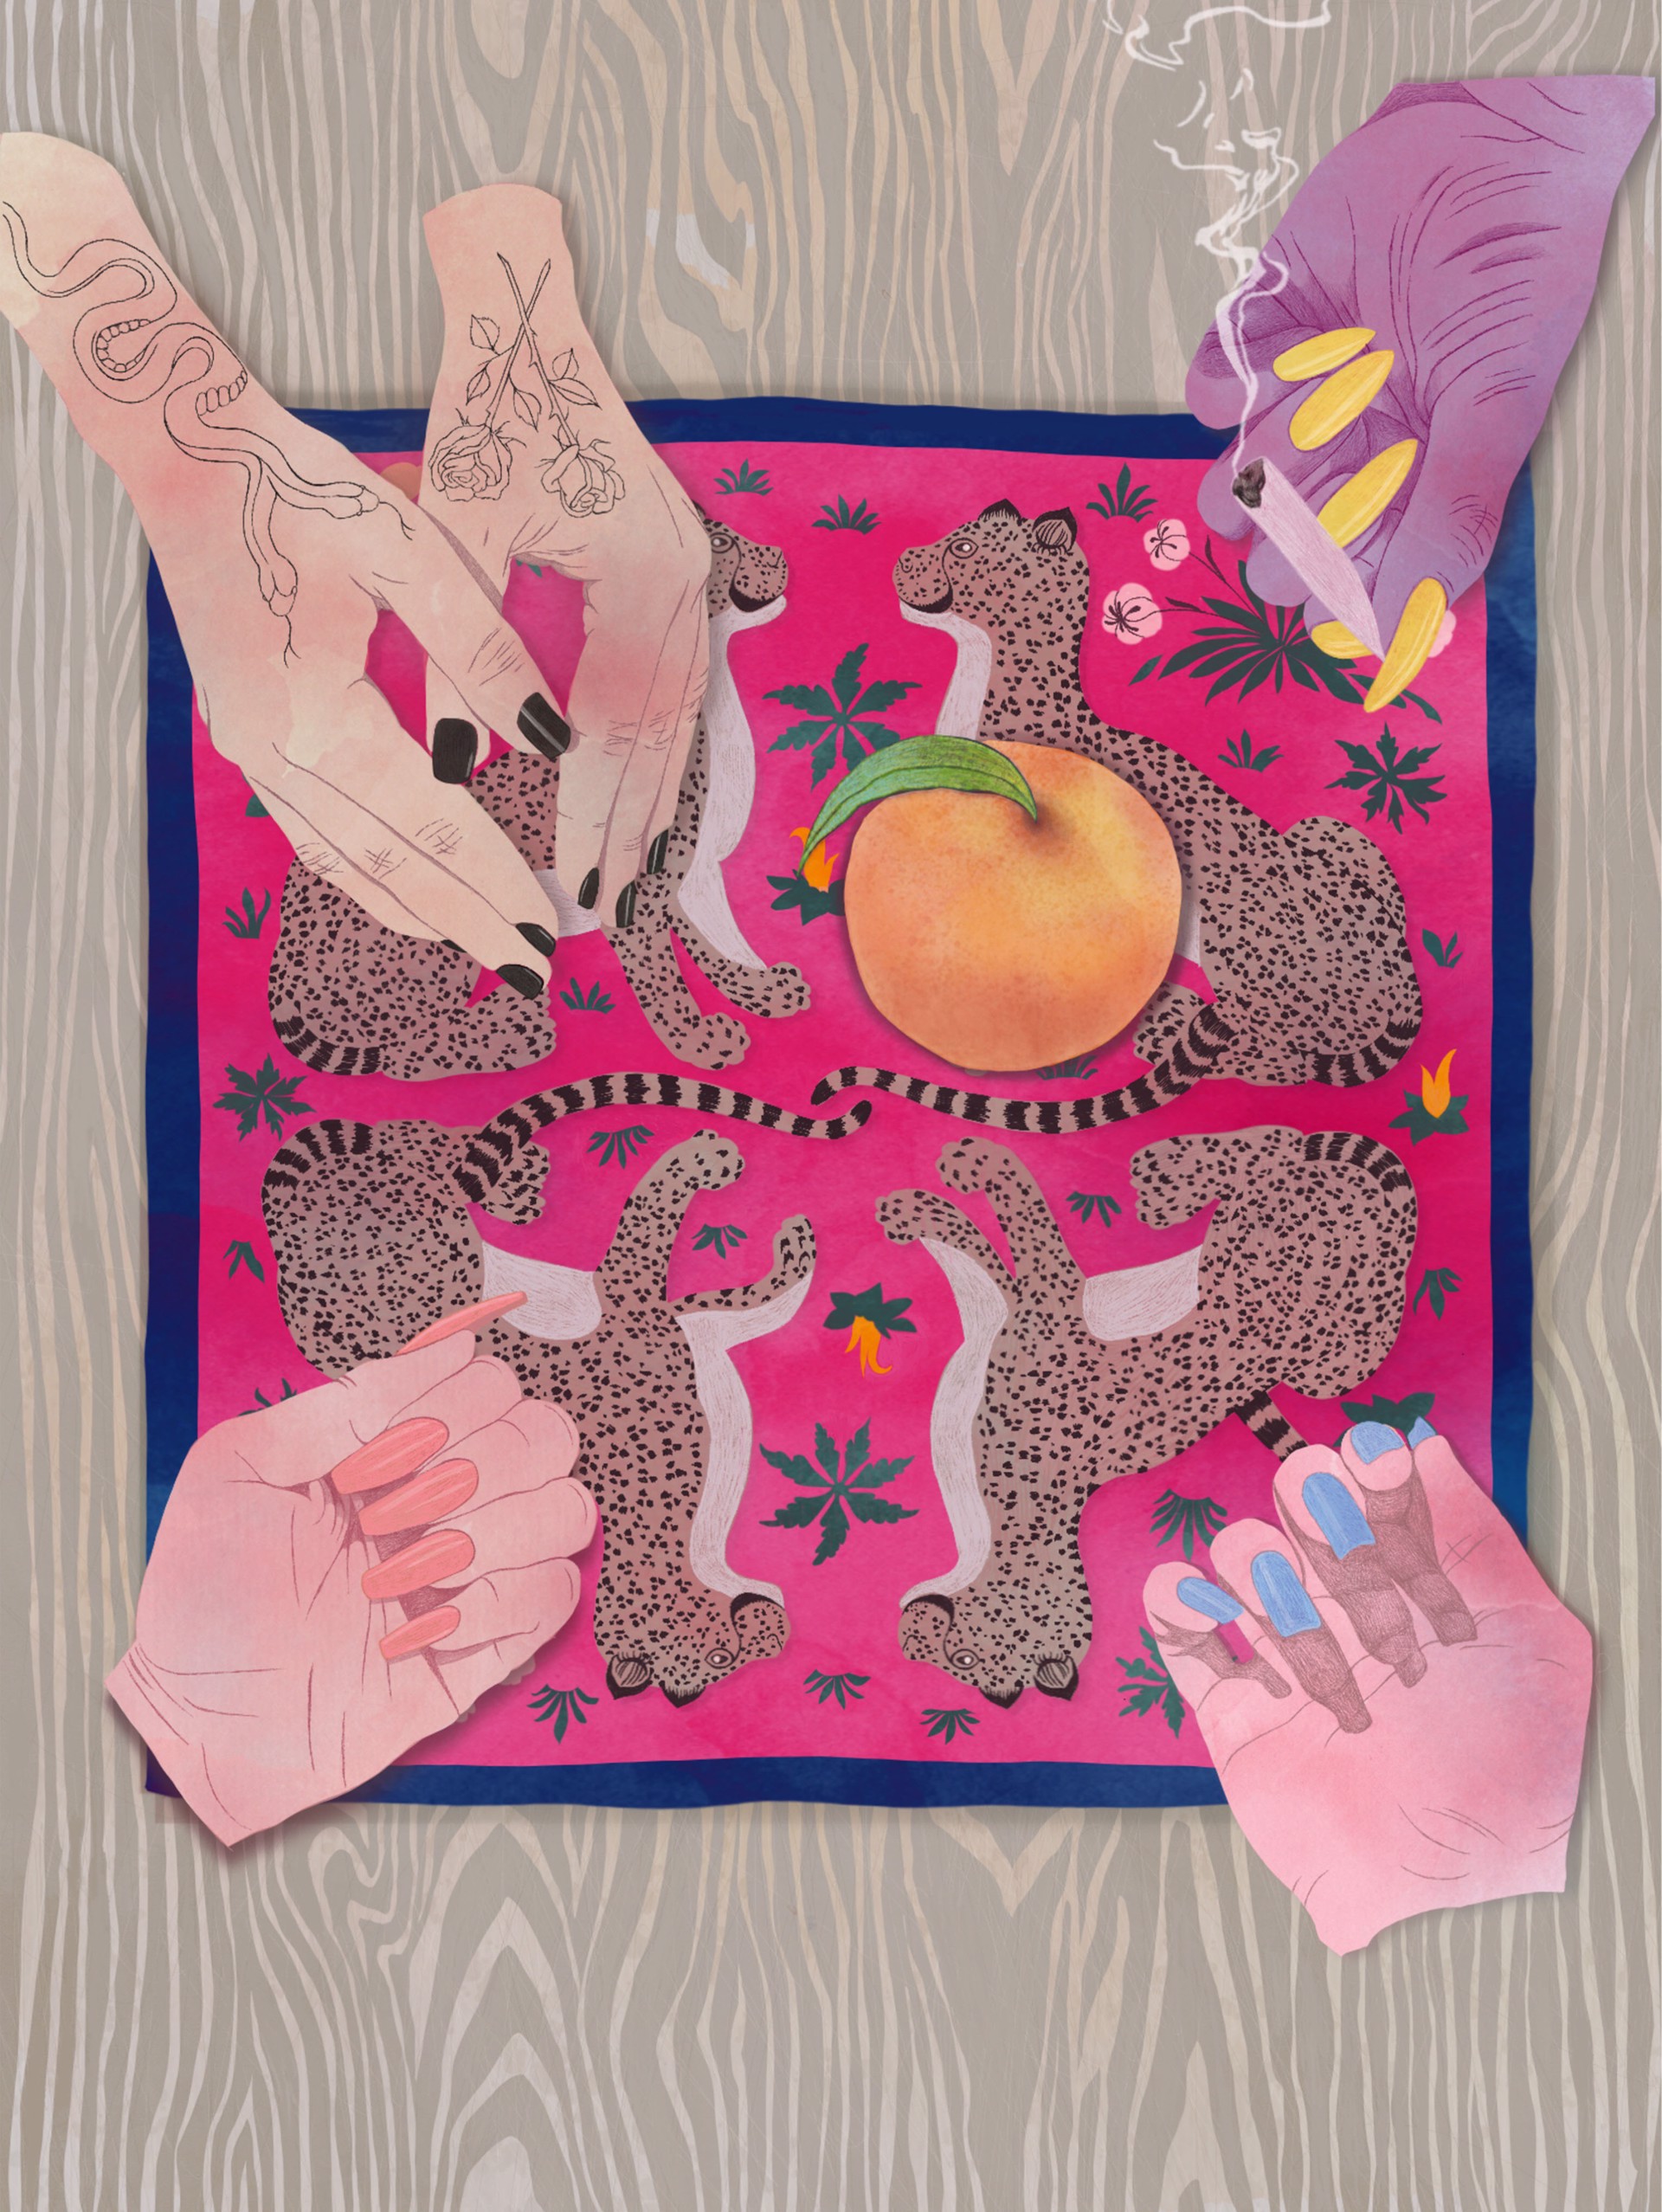 Four Girls, One Peach  by Lauren Gallaspy